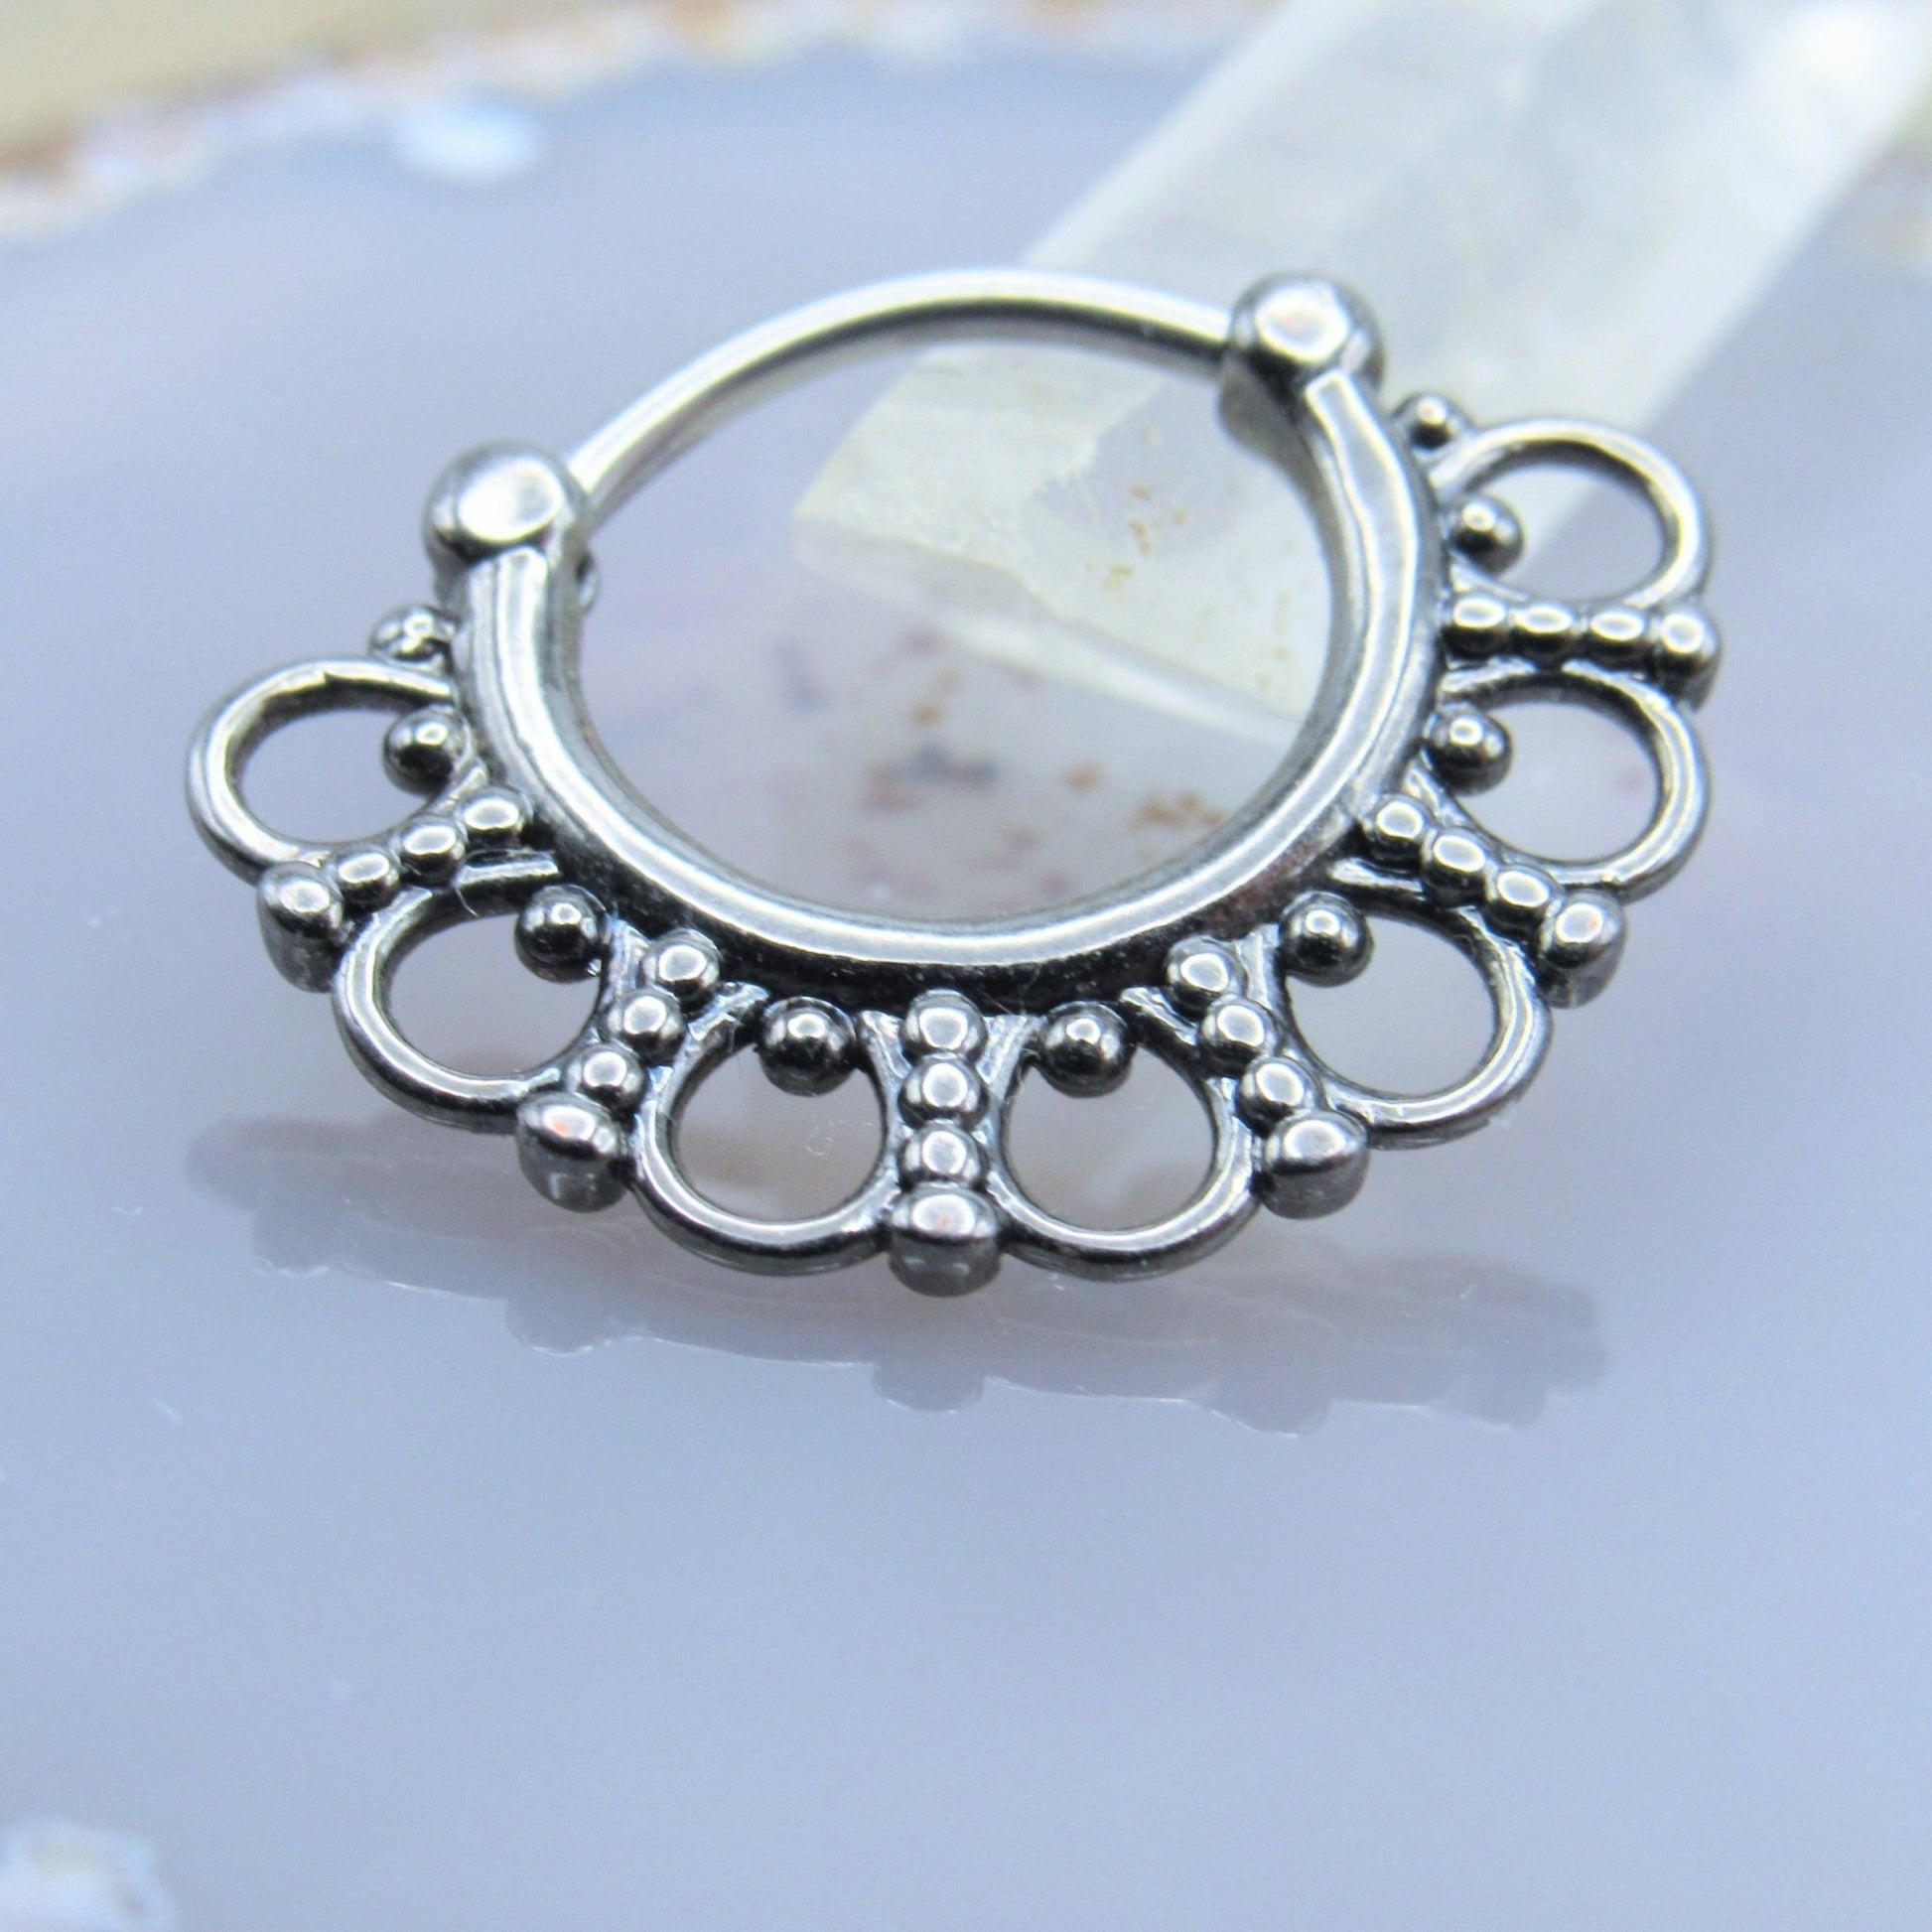 Septum piercing hinged clicker tribal fan filigree hanging design 3/8" inner diameter body jewelry hoop - Siren Body Jewelry